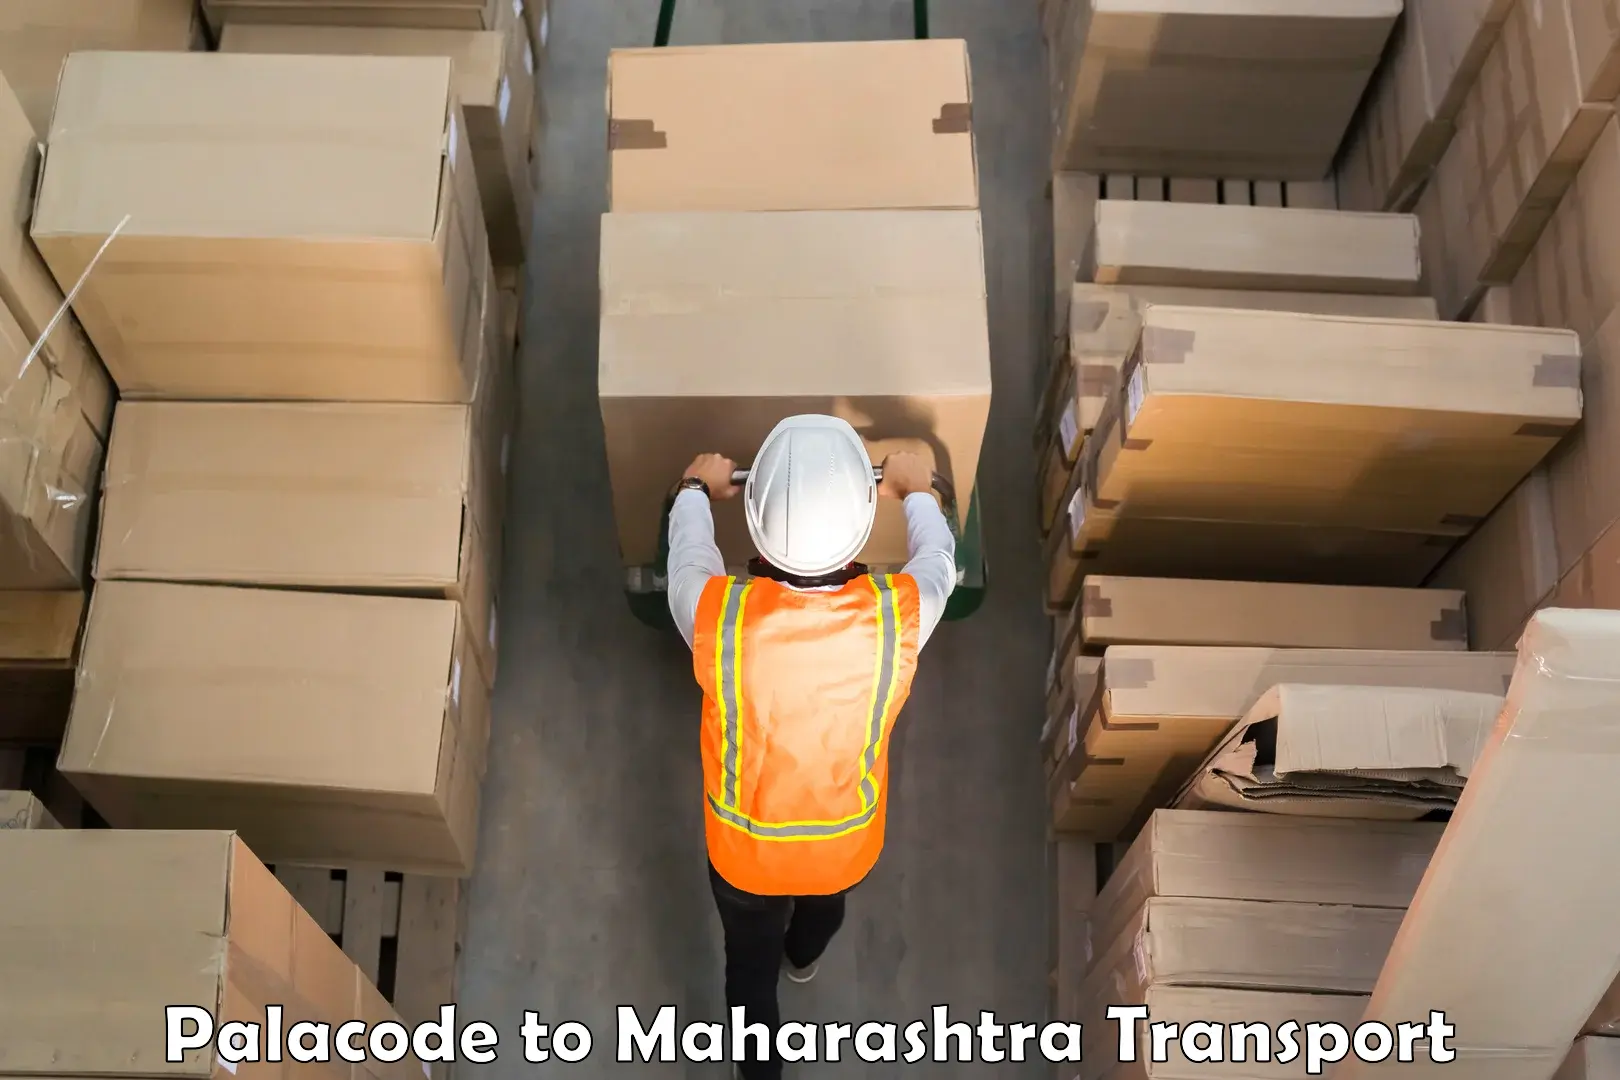 Truck transport companies in India Palacode to Mumbai